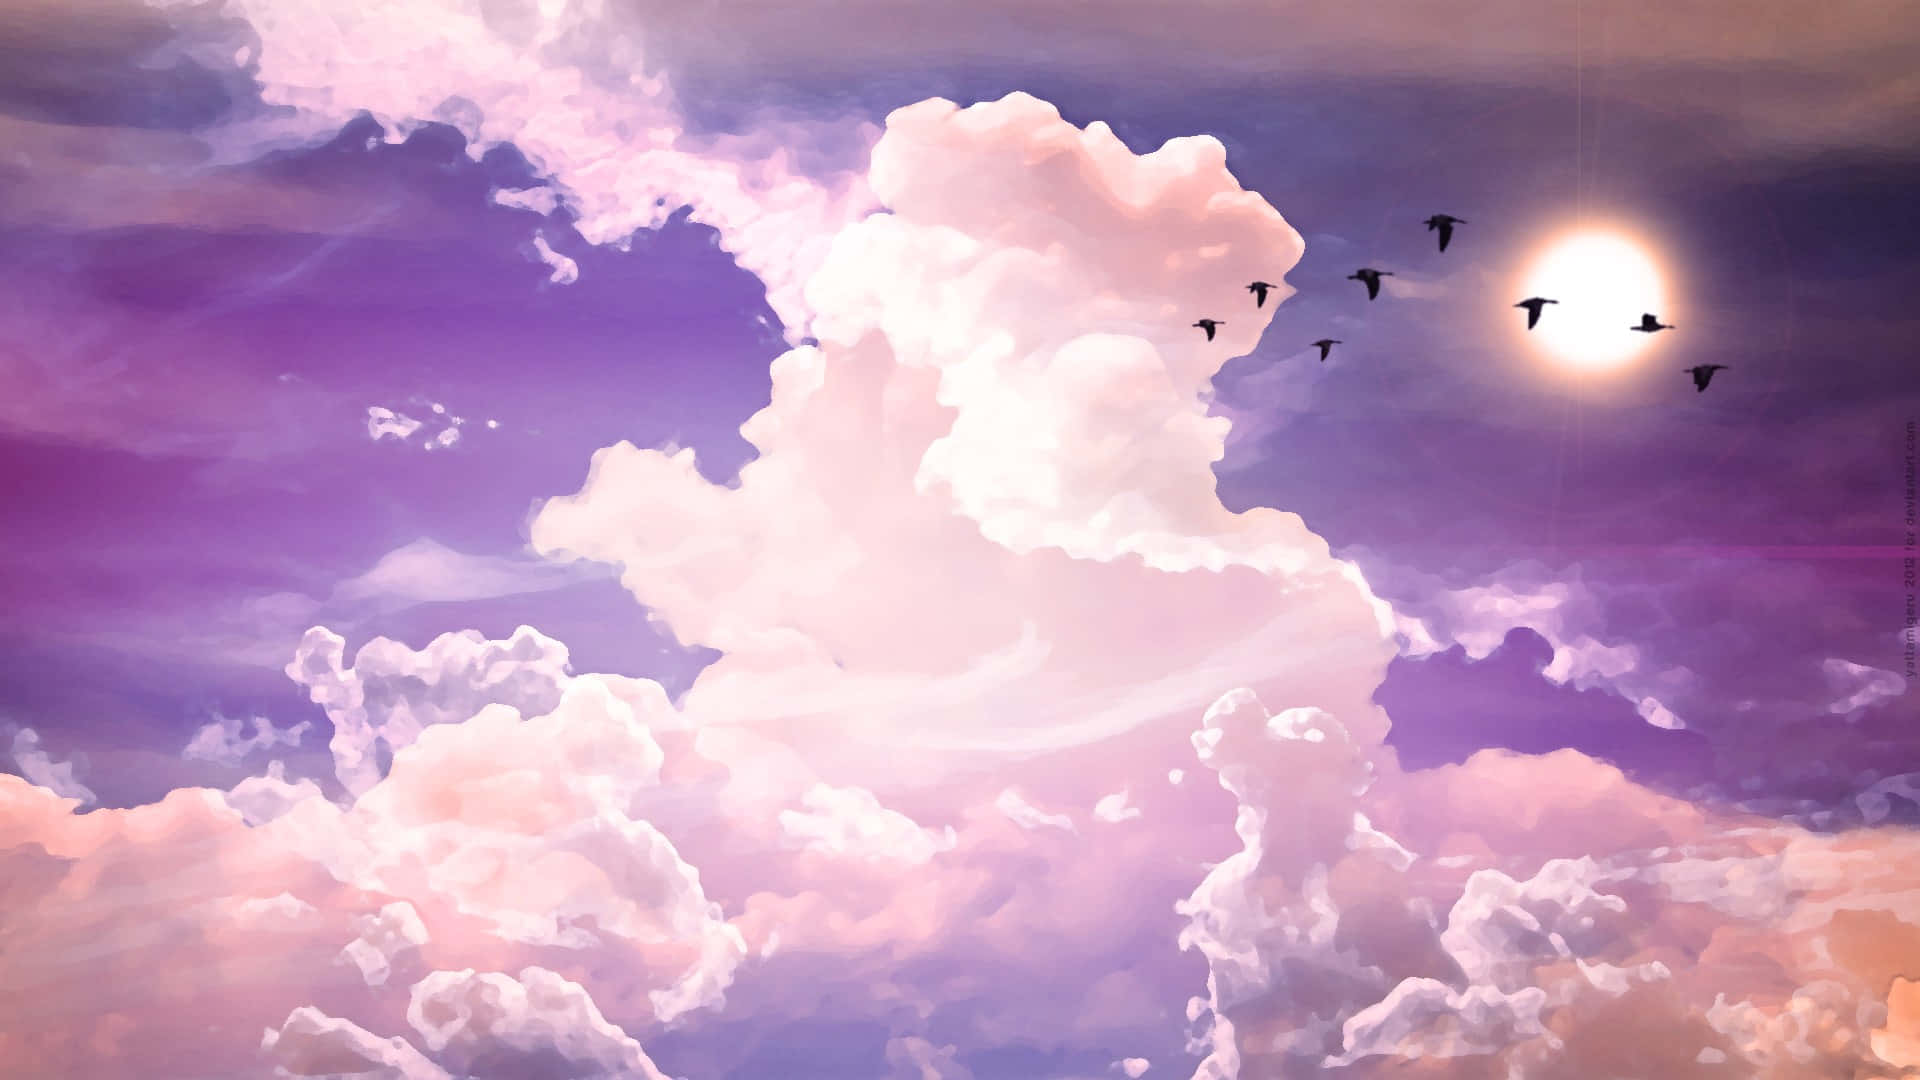 Purple Aesthetic Clouds Tumblr Laptop Wallpaper